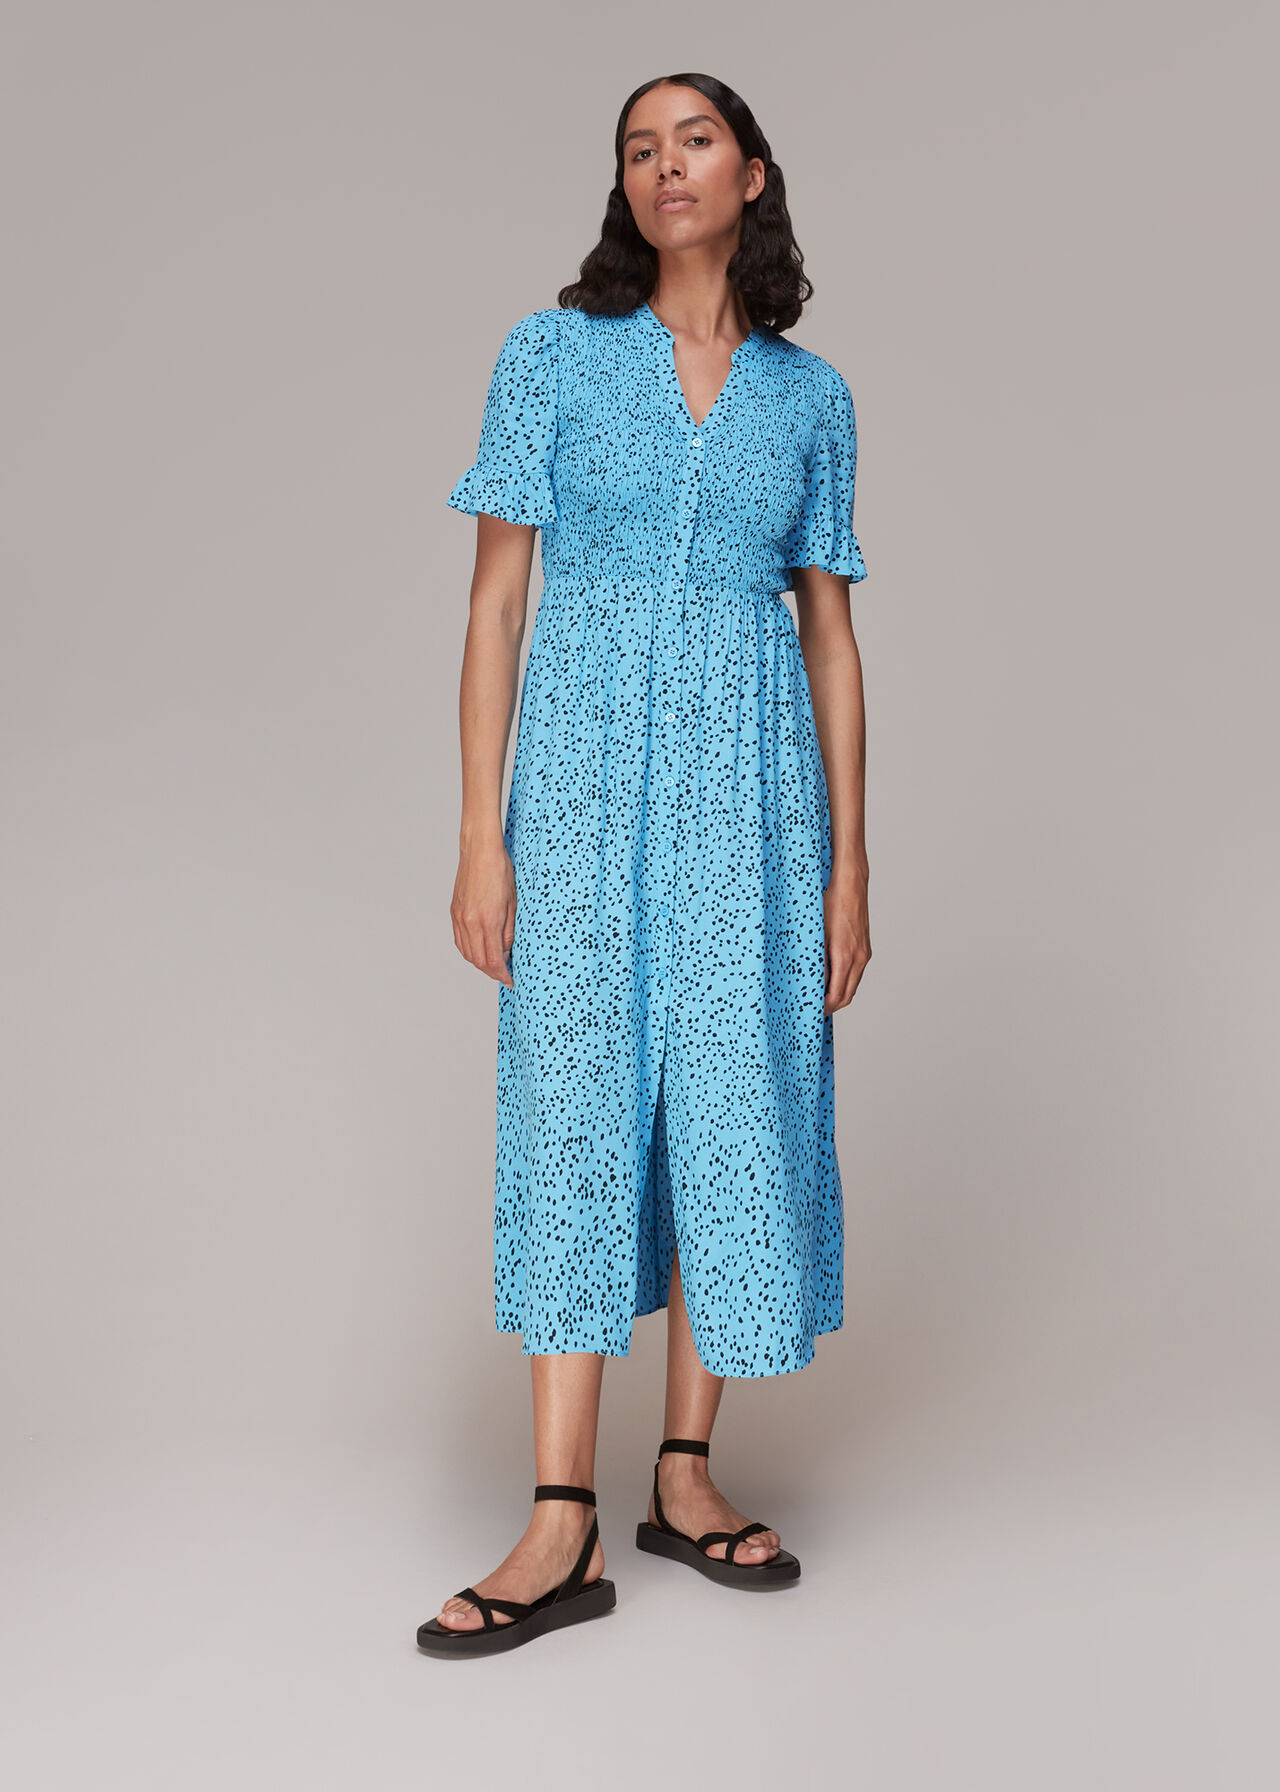 Blue/Multi Spotted Dot Shirred Midi Dress | WHISTLES | Whistles UK